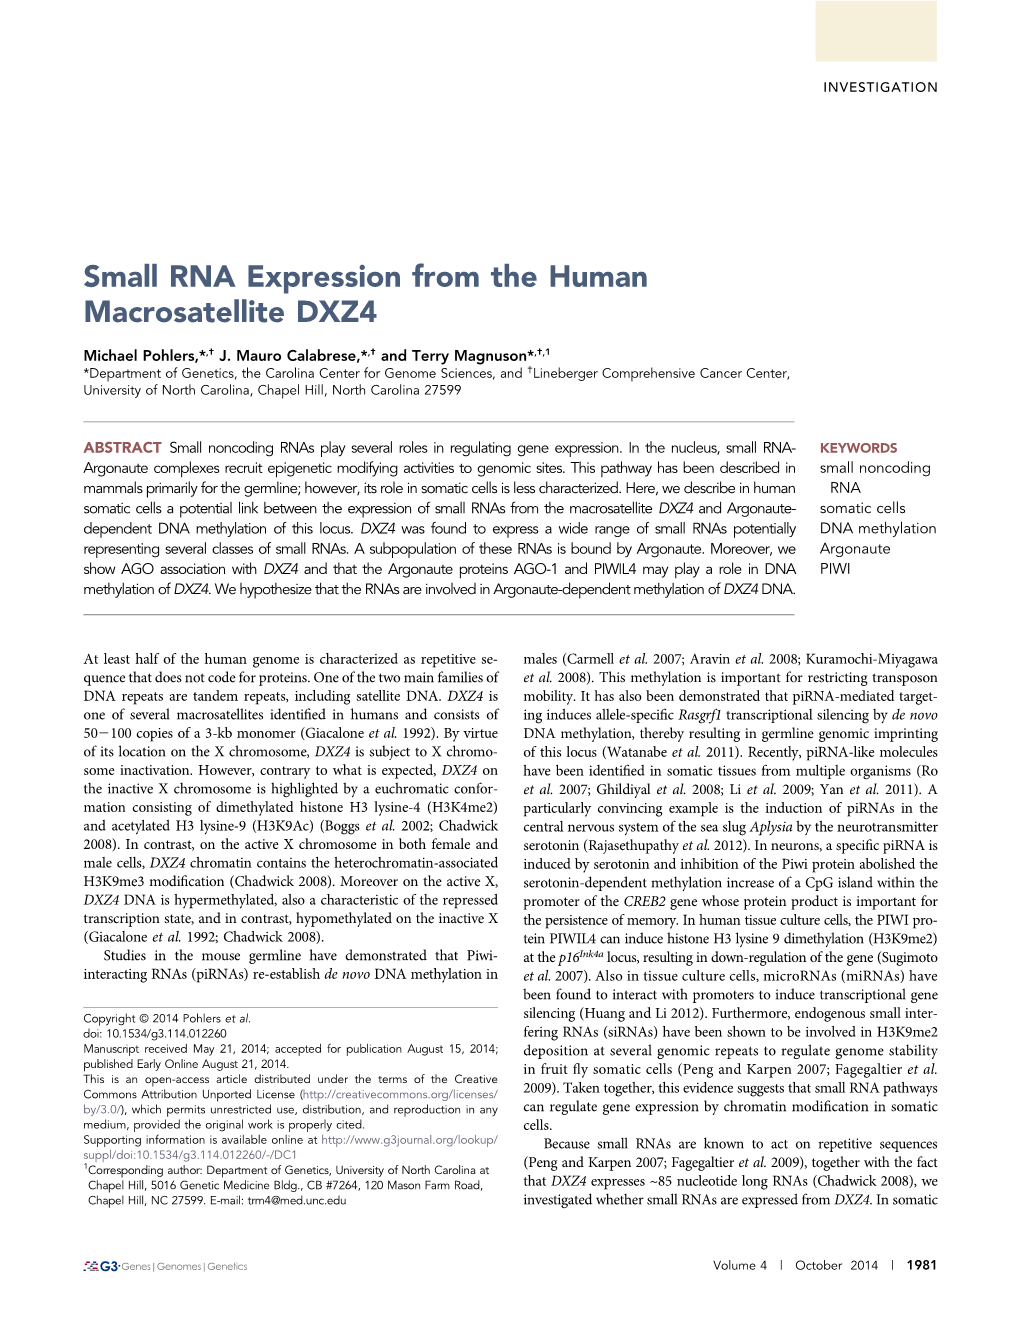 Small RNA Expression from the Human Macrosatellite DXZ4